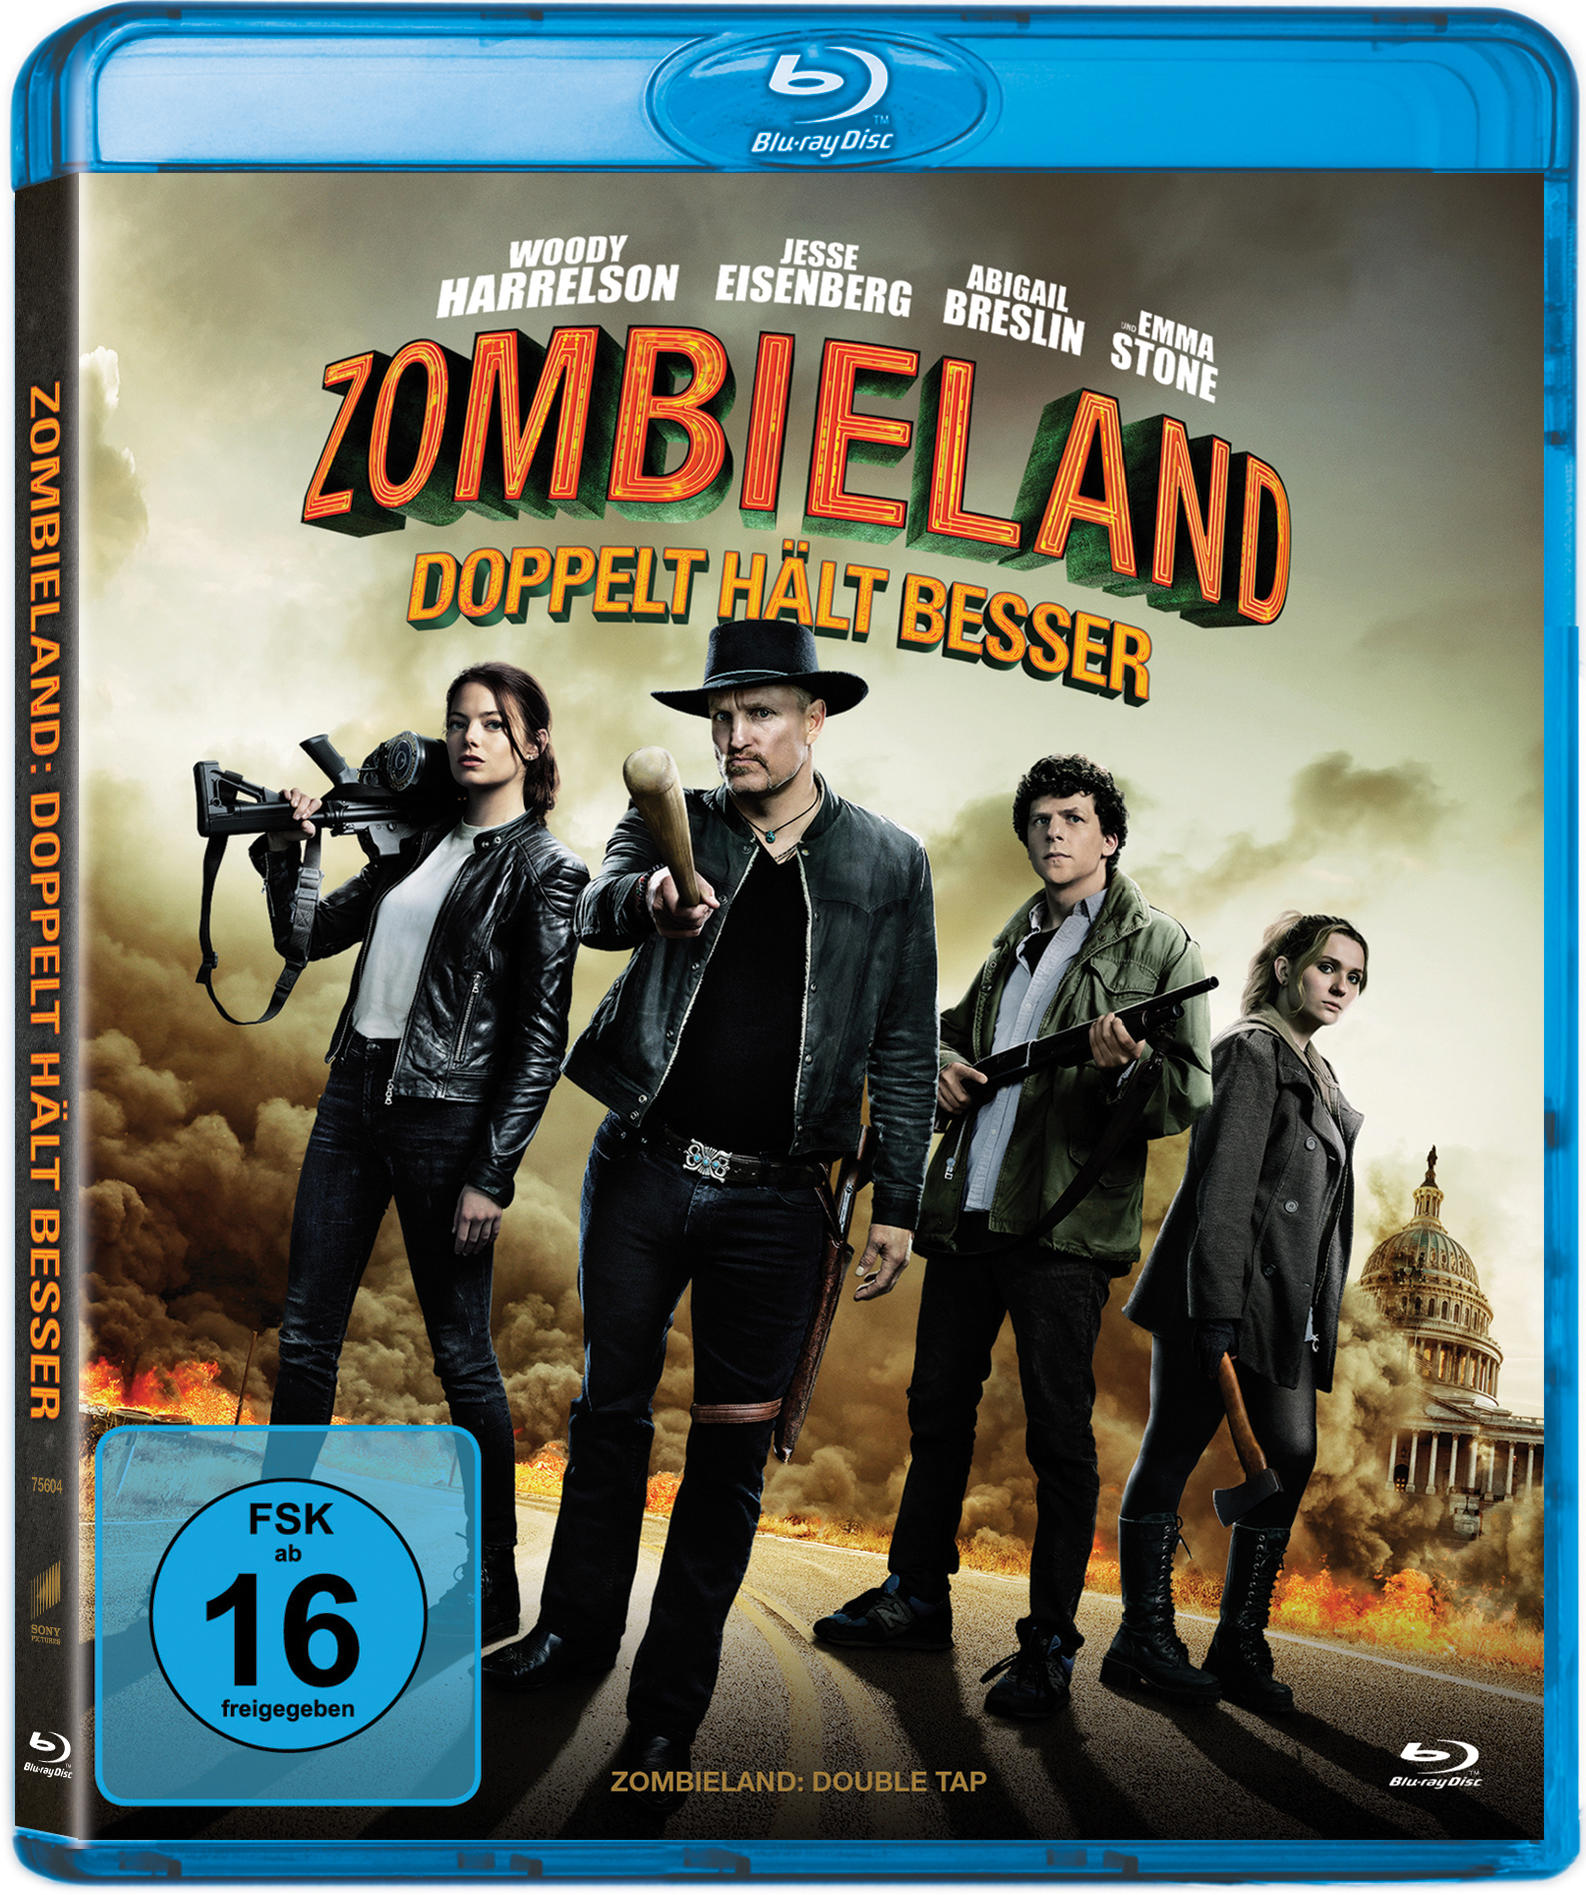 Blu-ray hält Zombieland: besser Doppelt